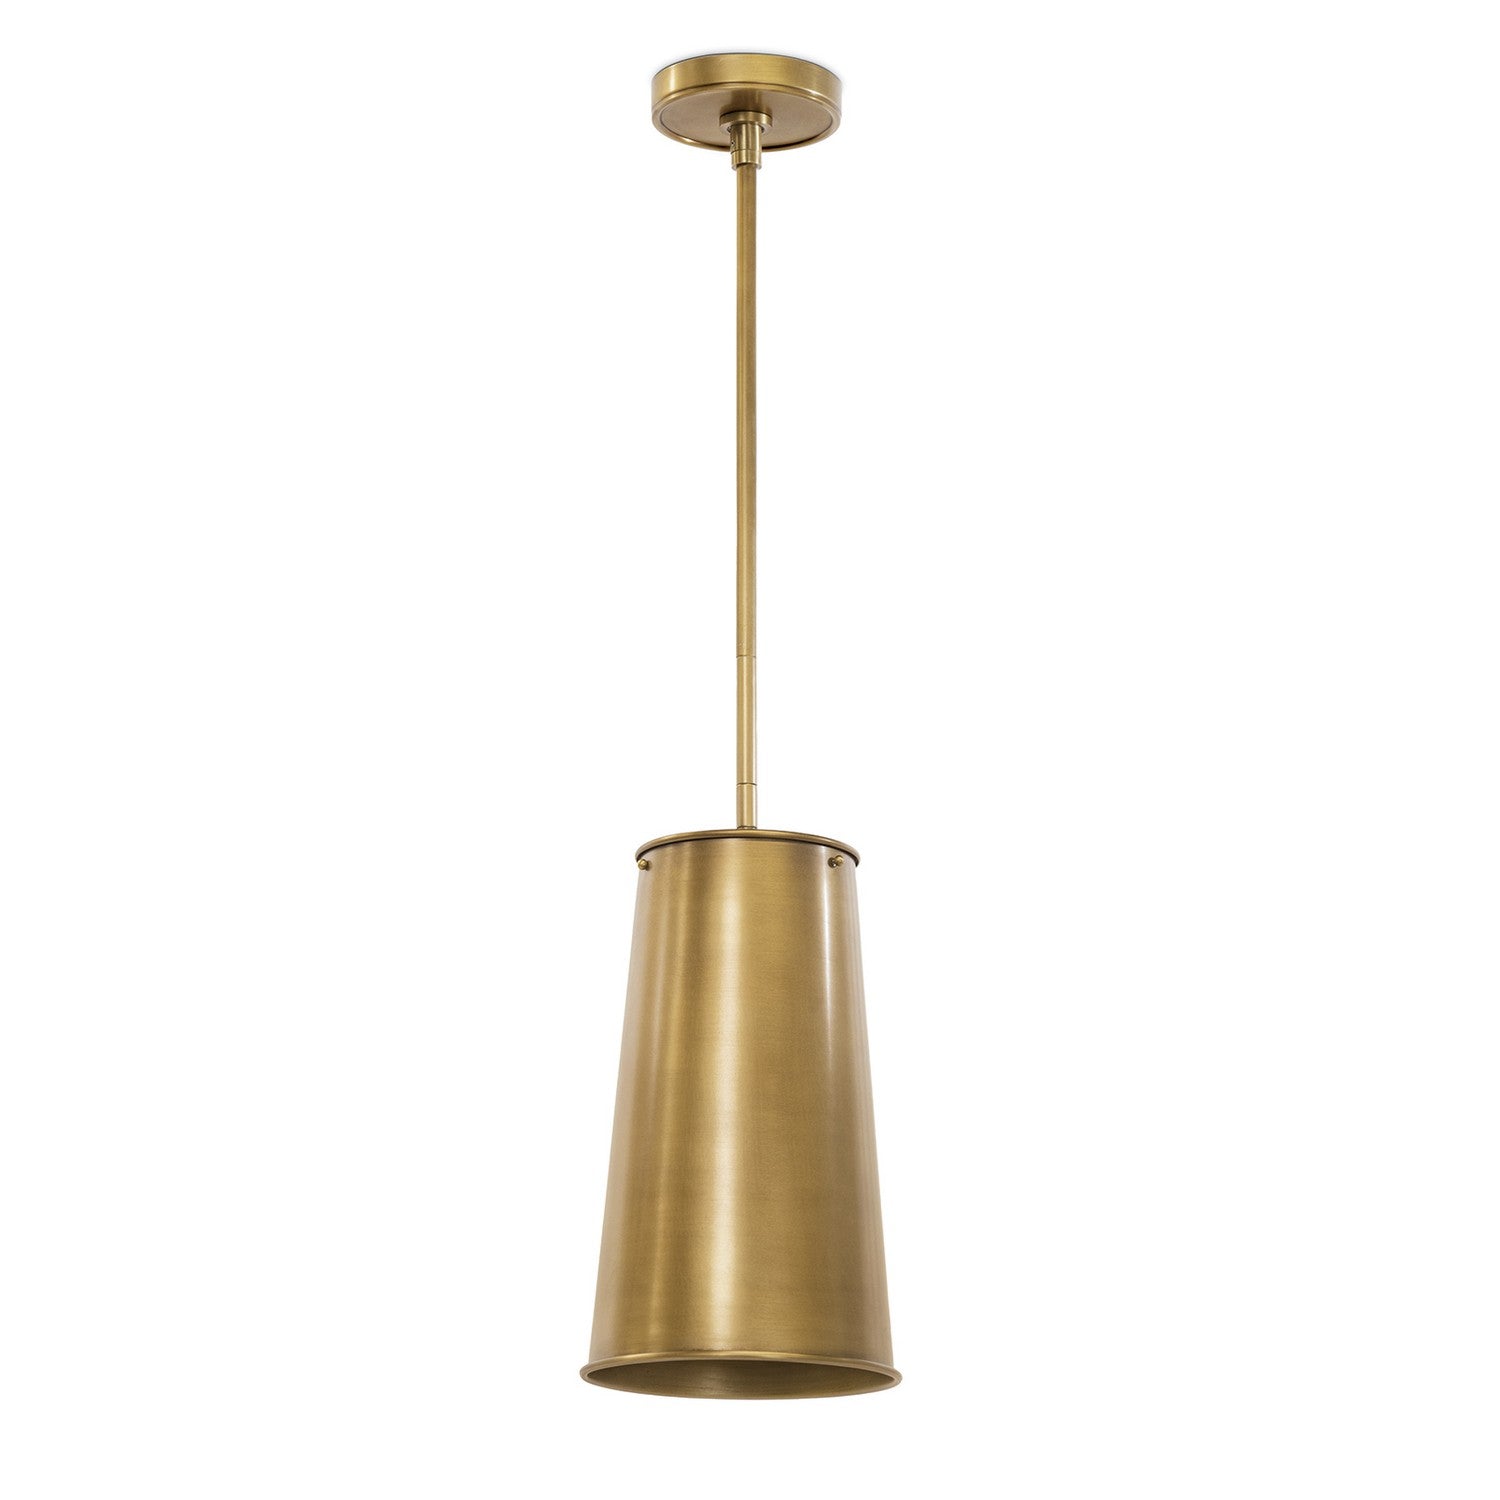 Regina Andrew - 16-1392NB - One Light Pendant - Hattie - Natural Brass